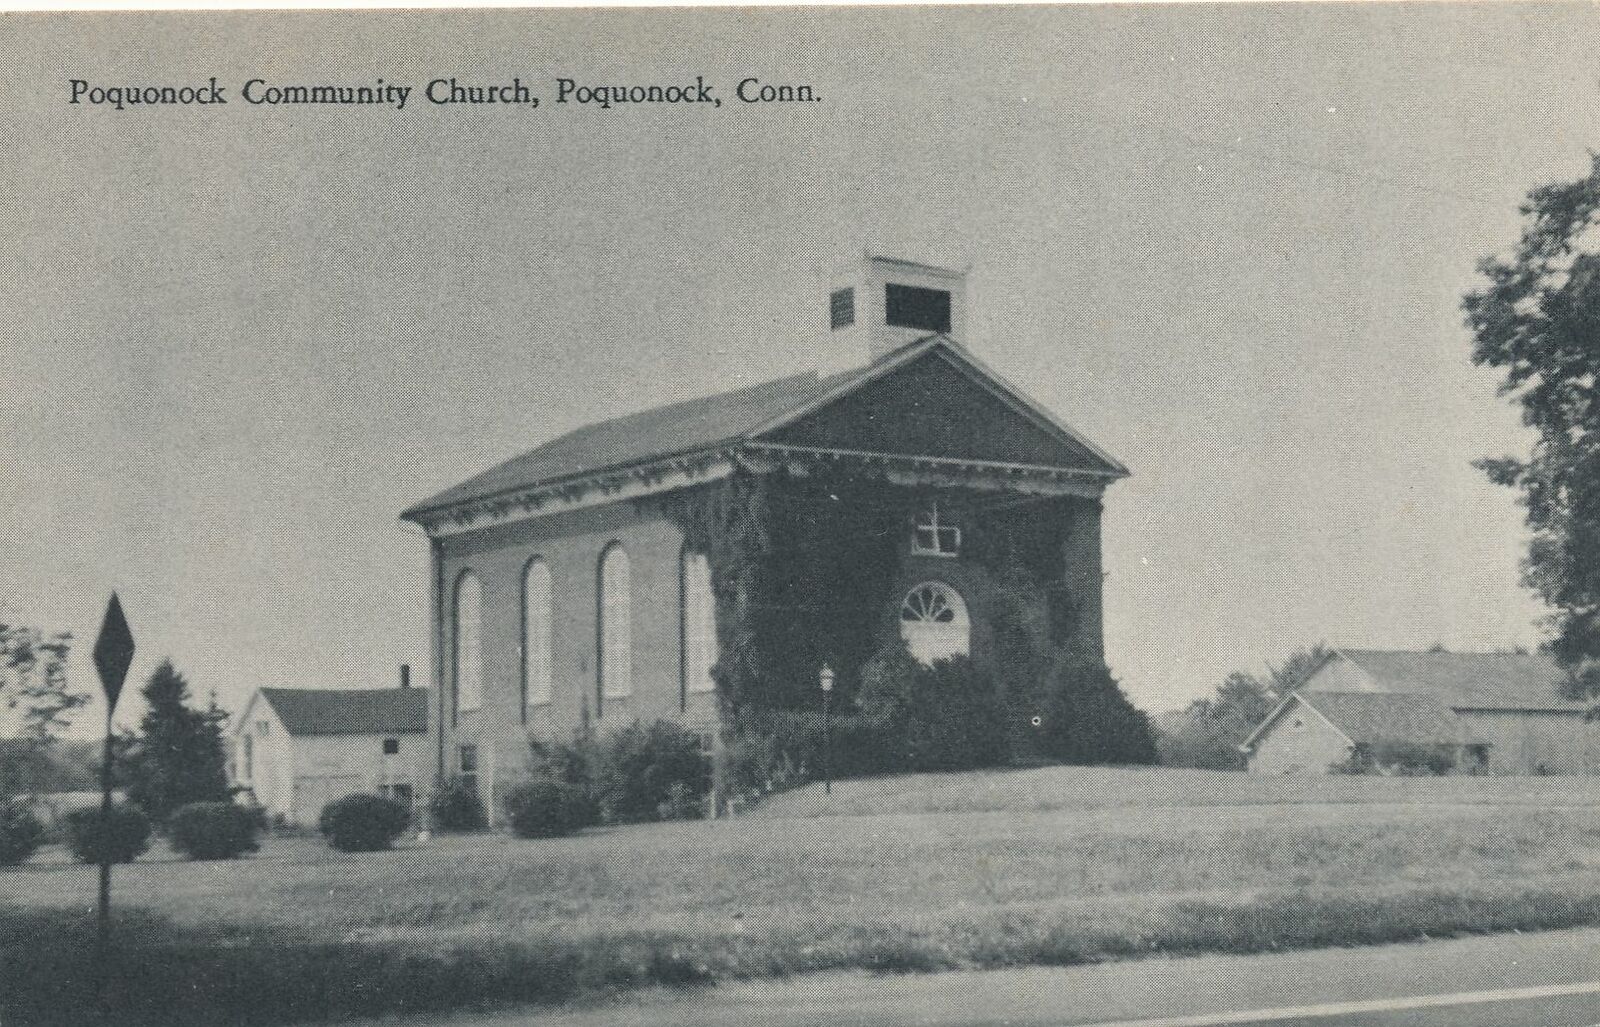 POQUONOCK CT - Poquonock Community Church